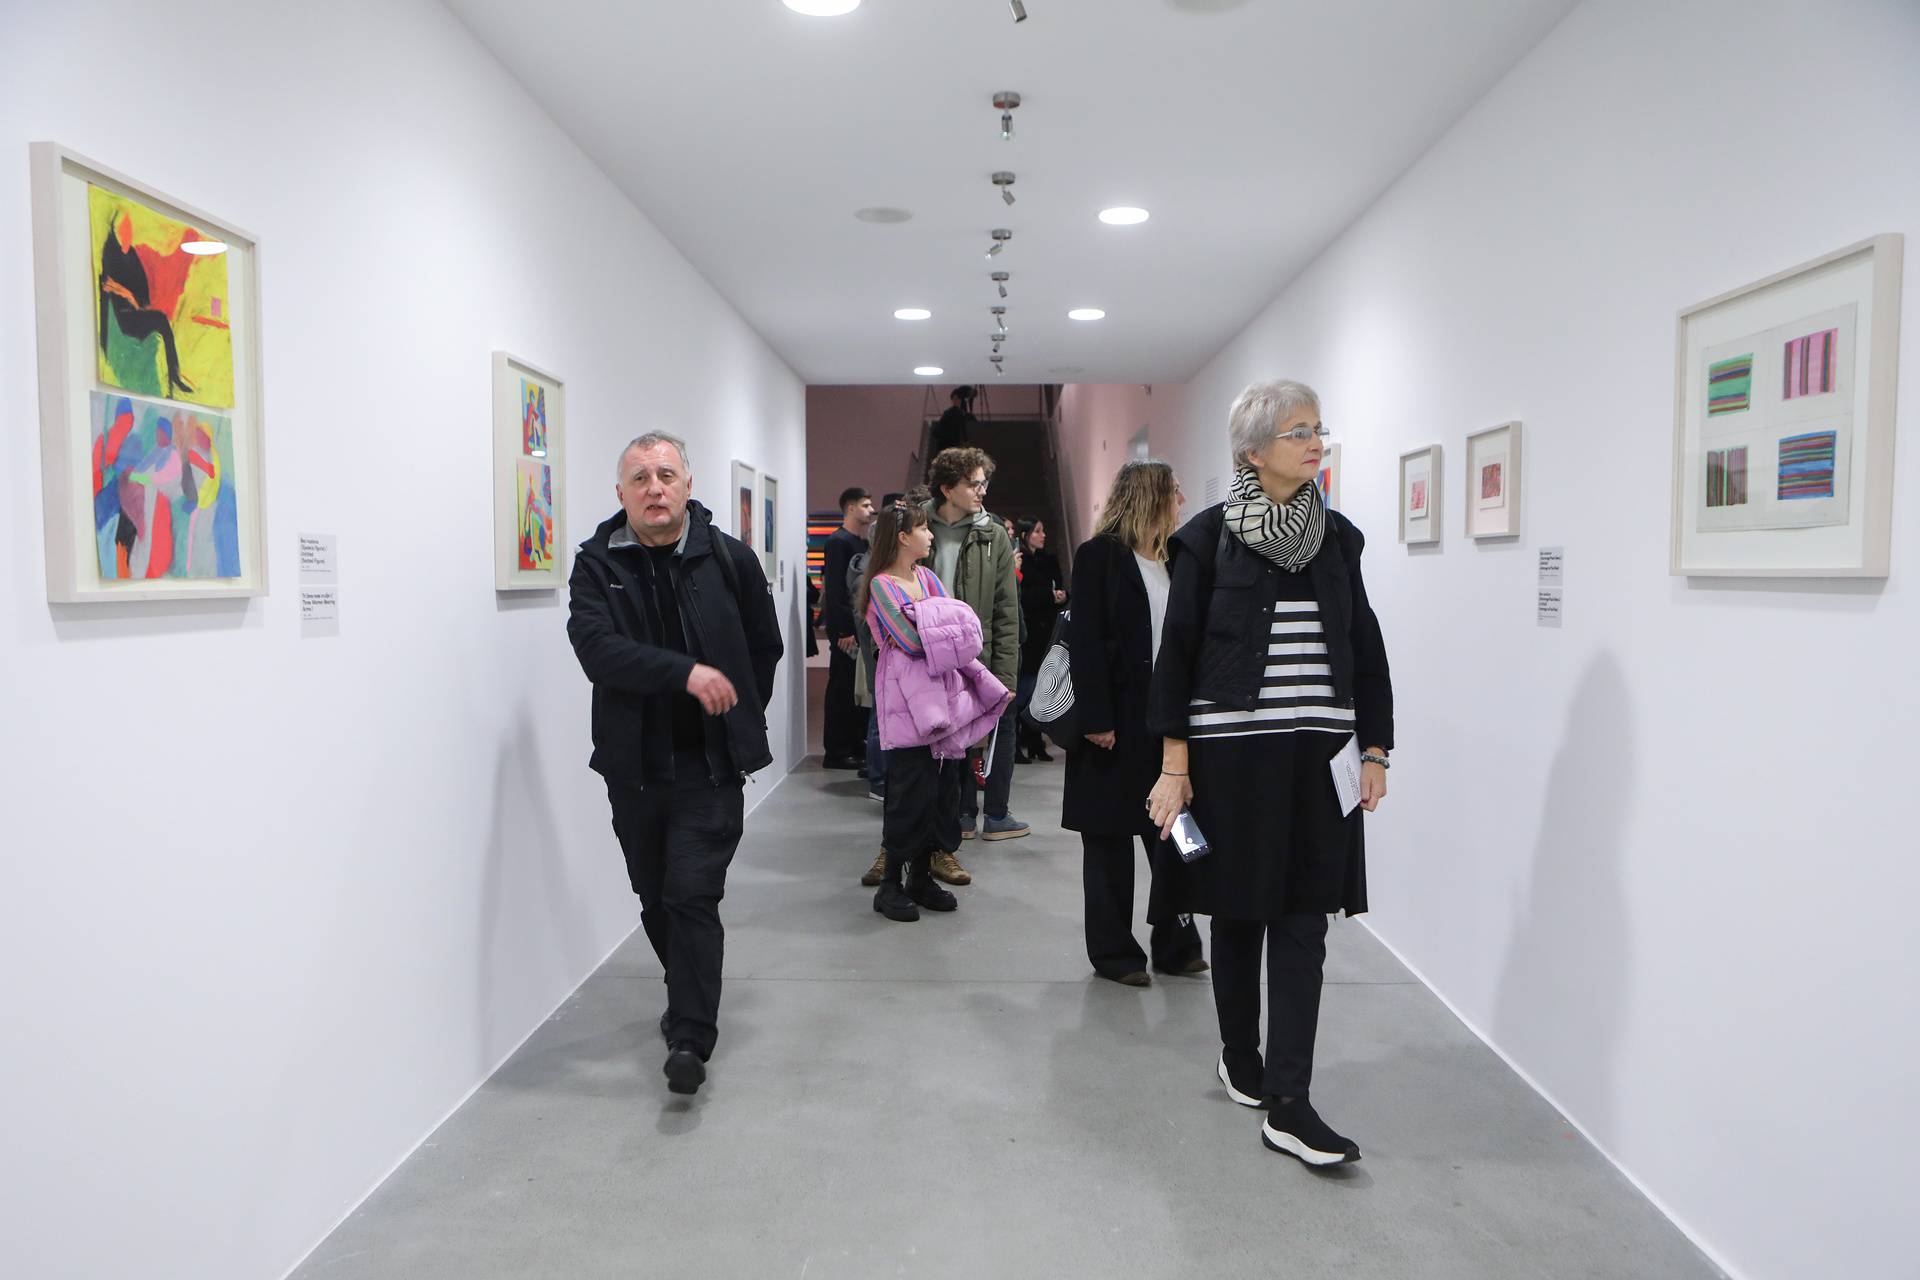 Zagreb: Otvorena retrospektivna izložba "Putnik" slikara Seana Scullyja